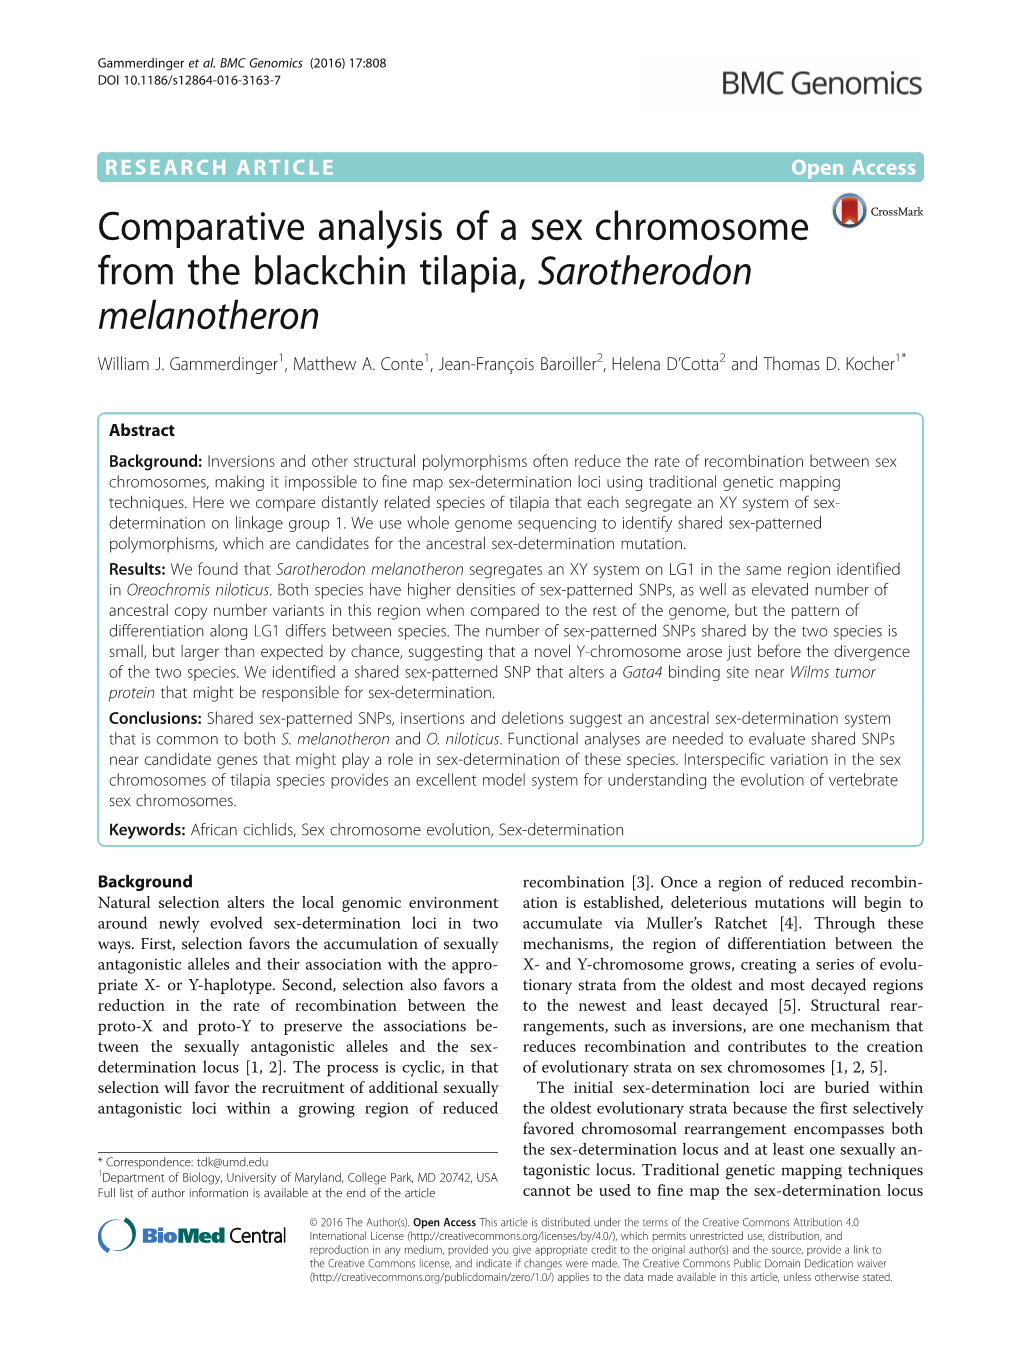 Comparative Analysis of a Sex Chromosome from the Blackchin Tilapia, Sarotherodon Melanotheron